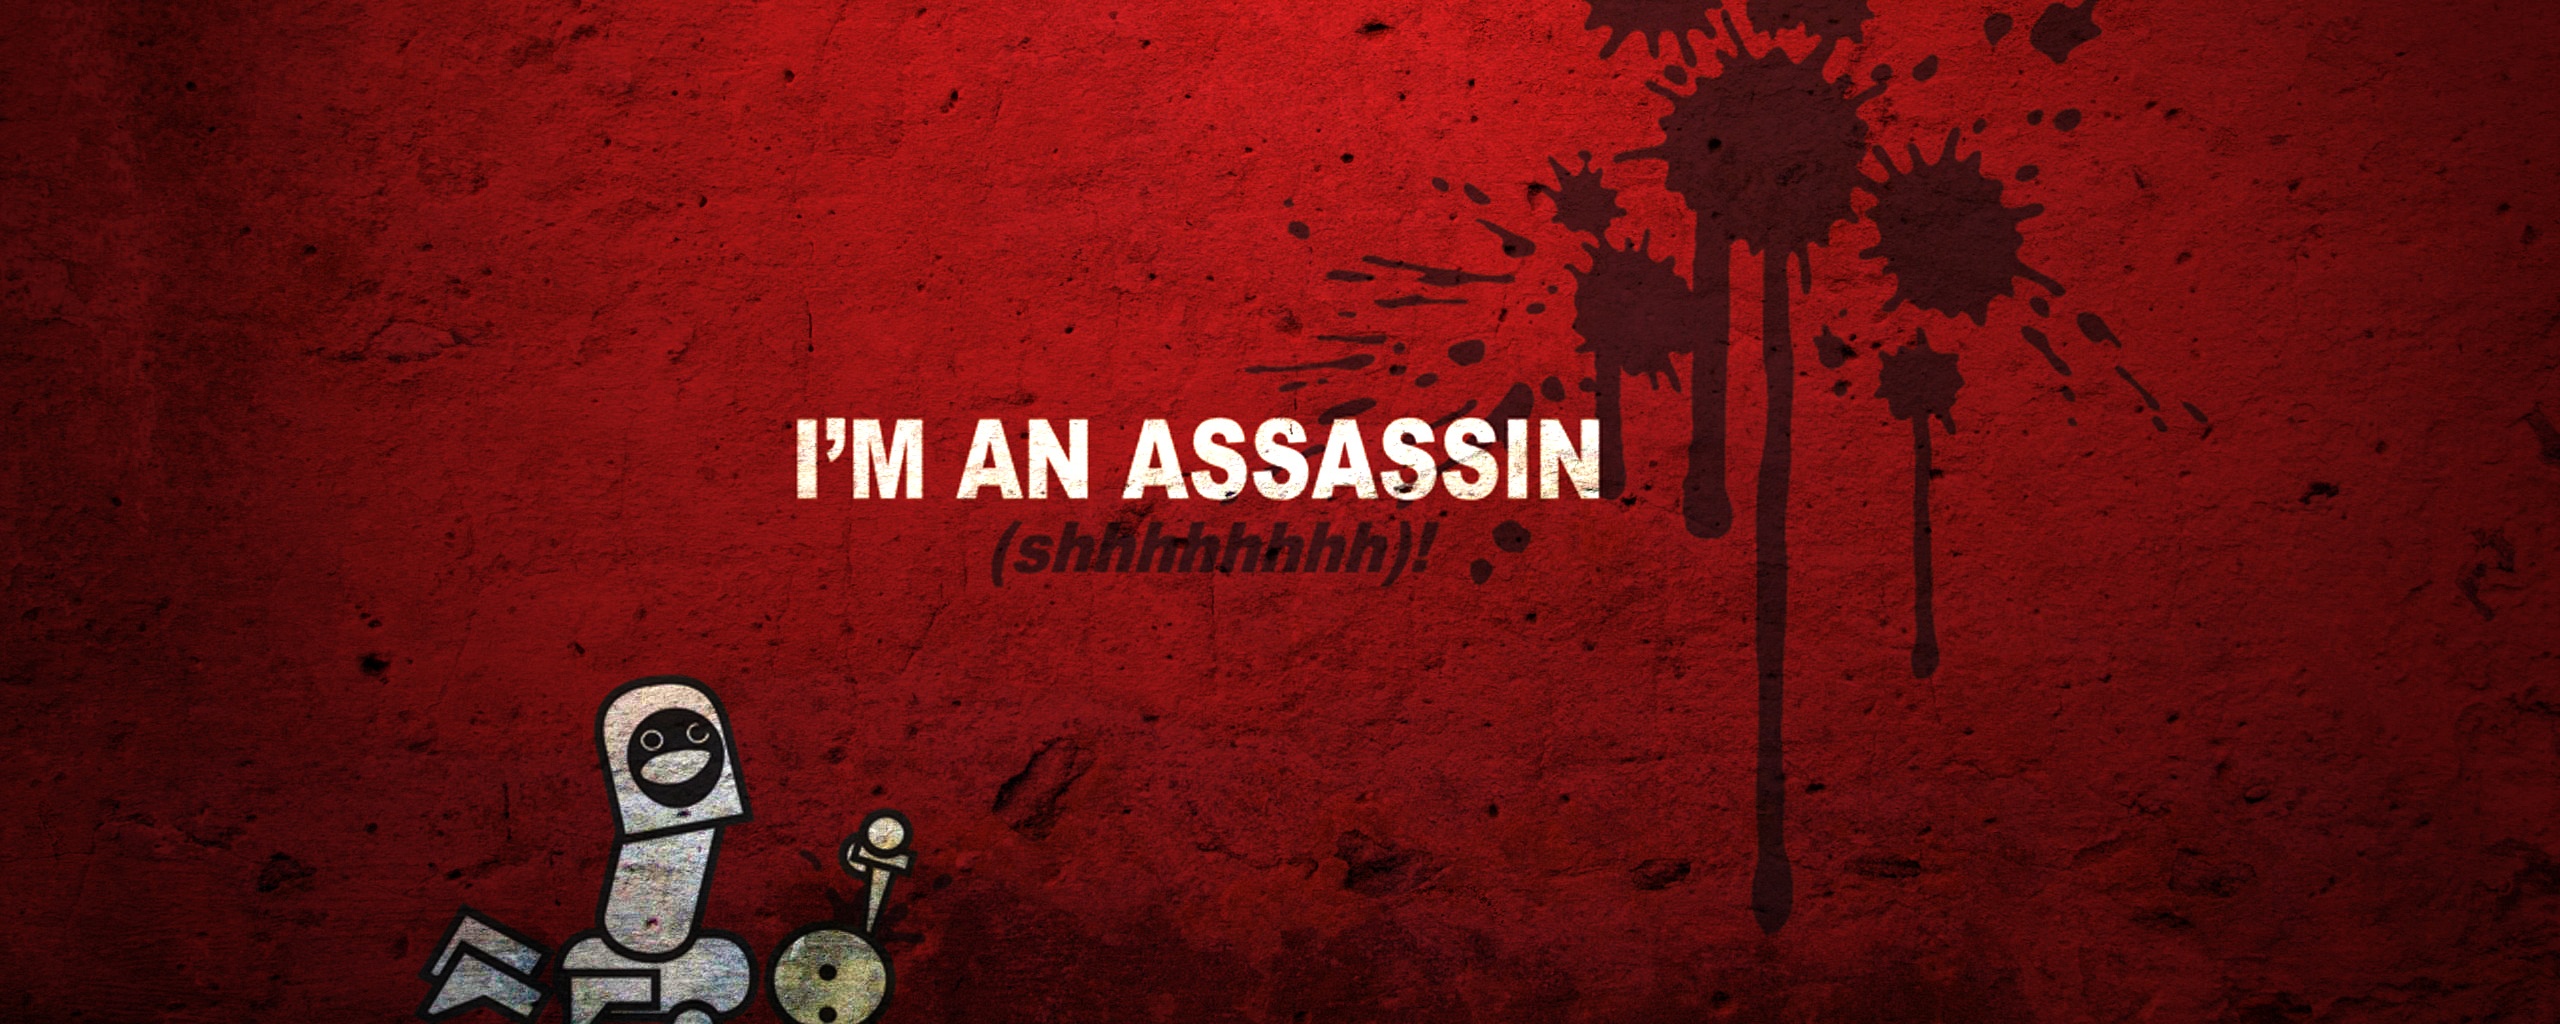 I'm an assassin обои